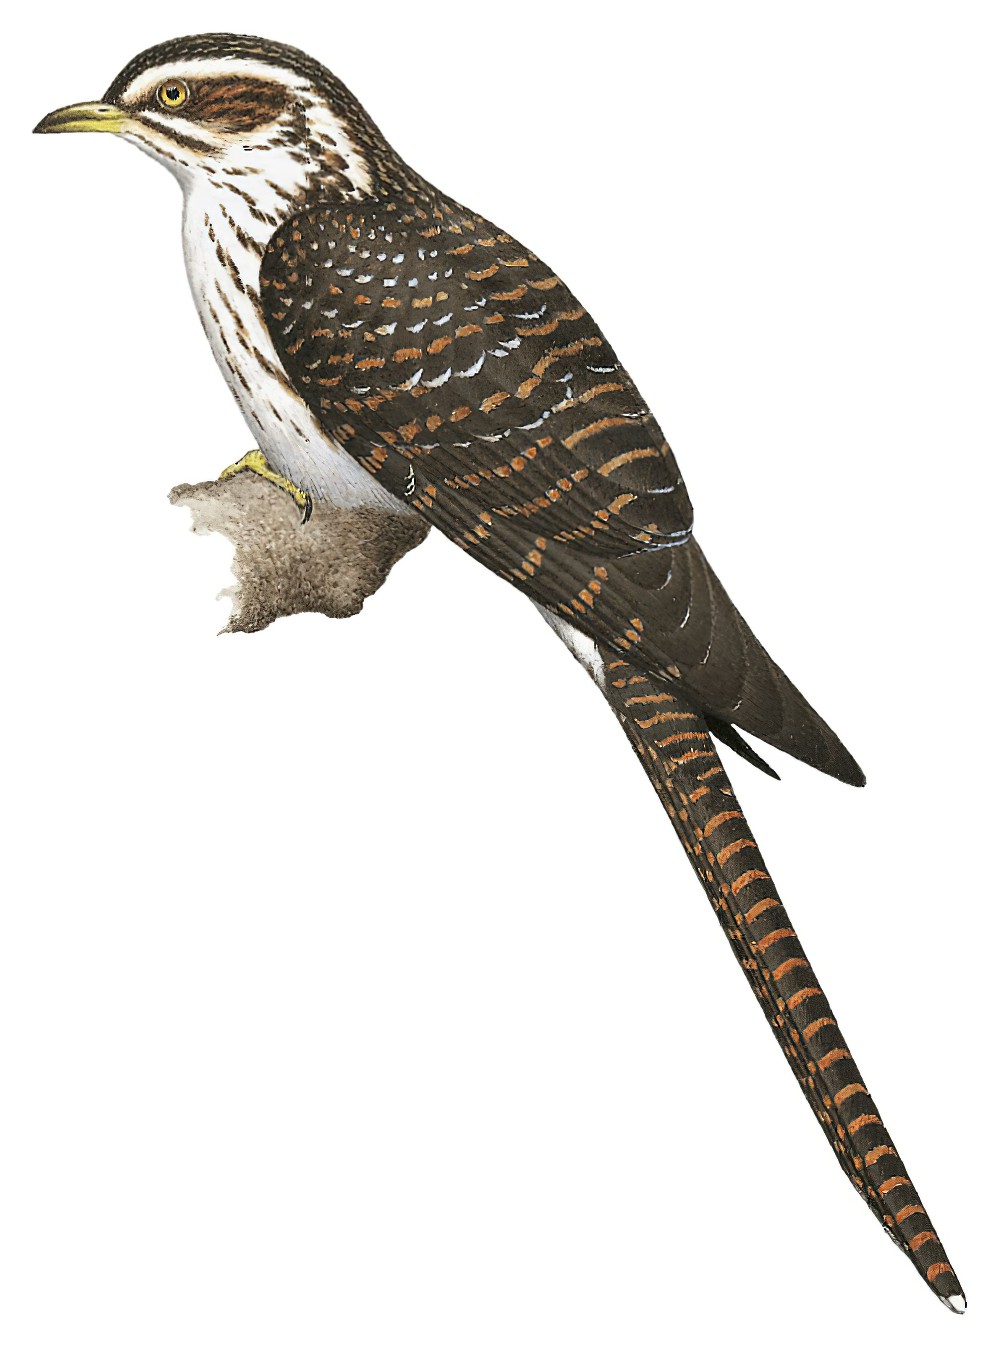 Long-tailed Koel / Urodynamis taitensis